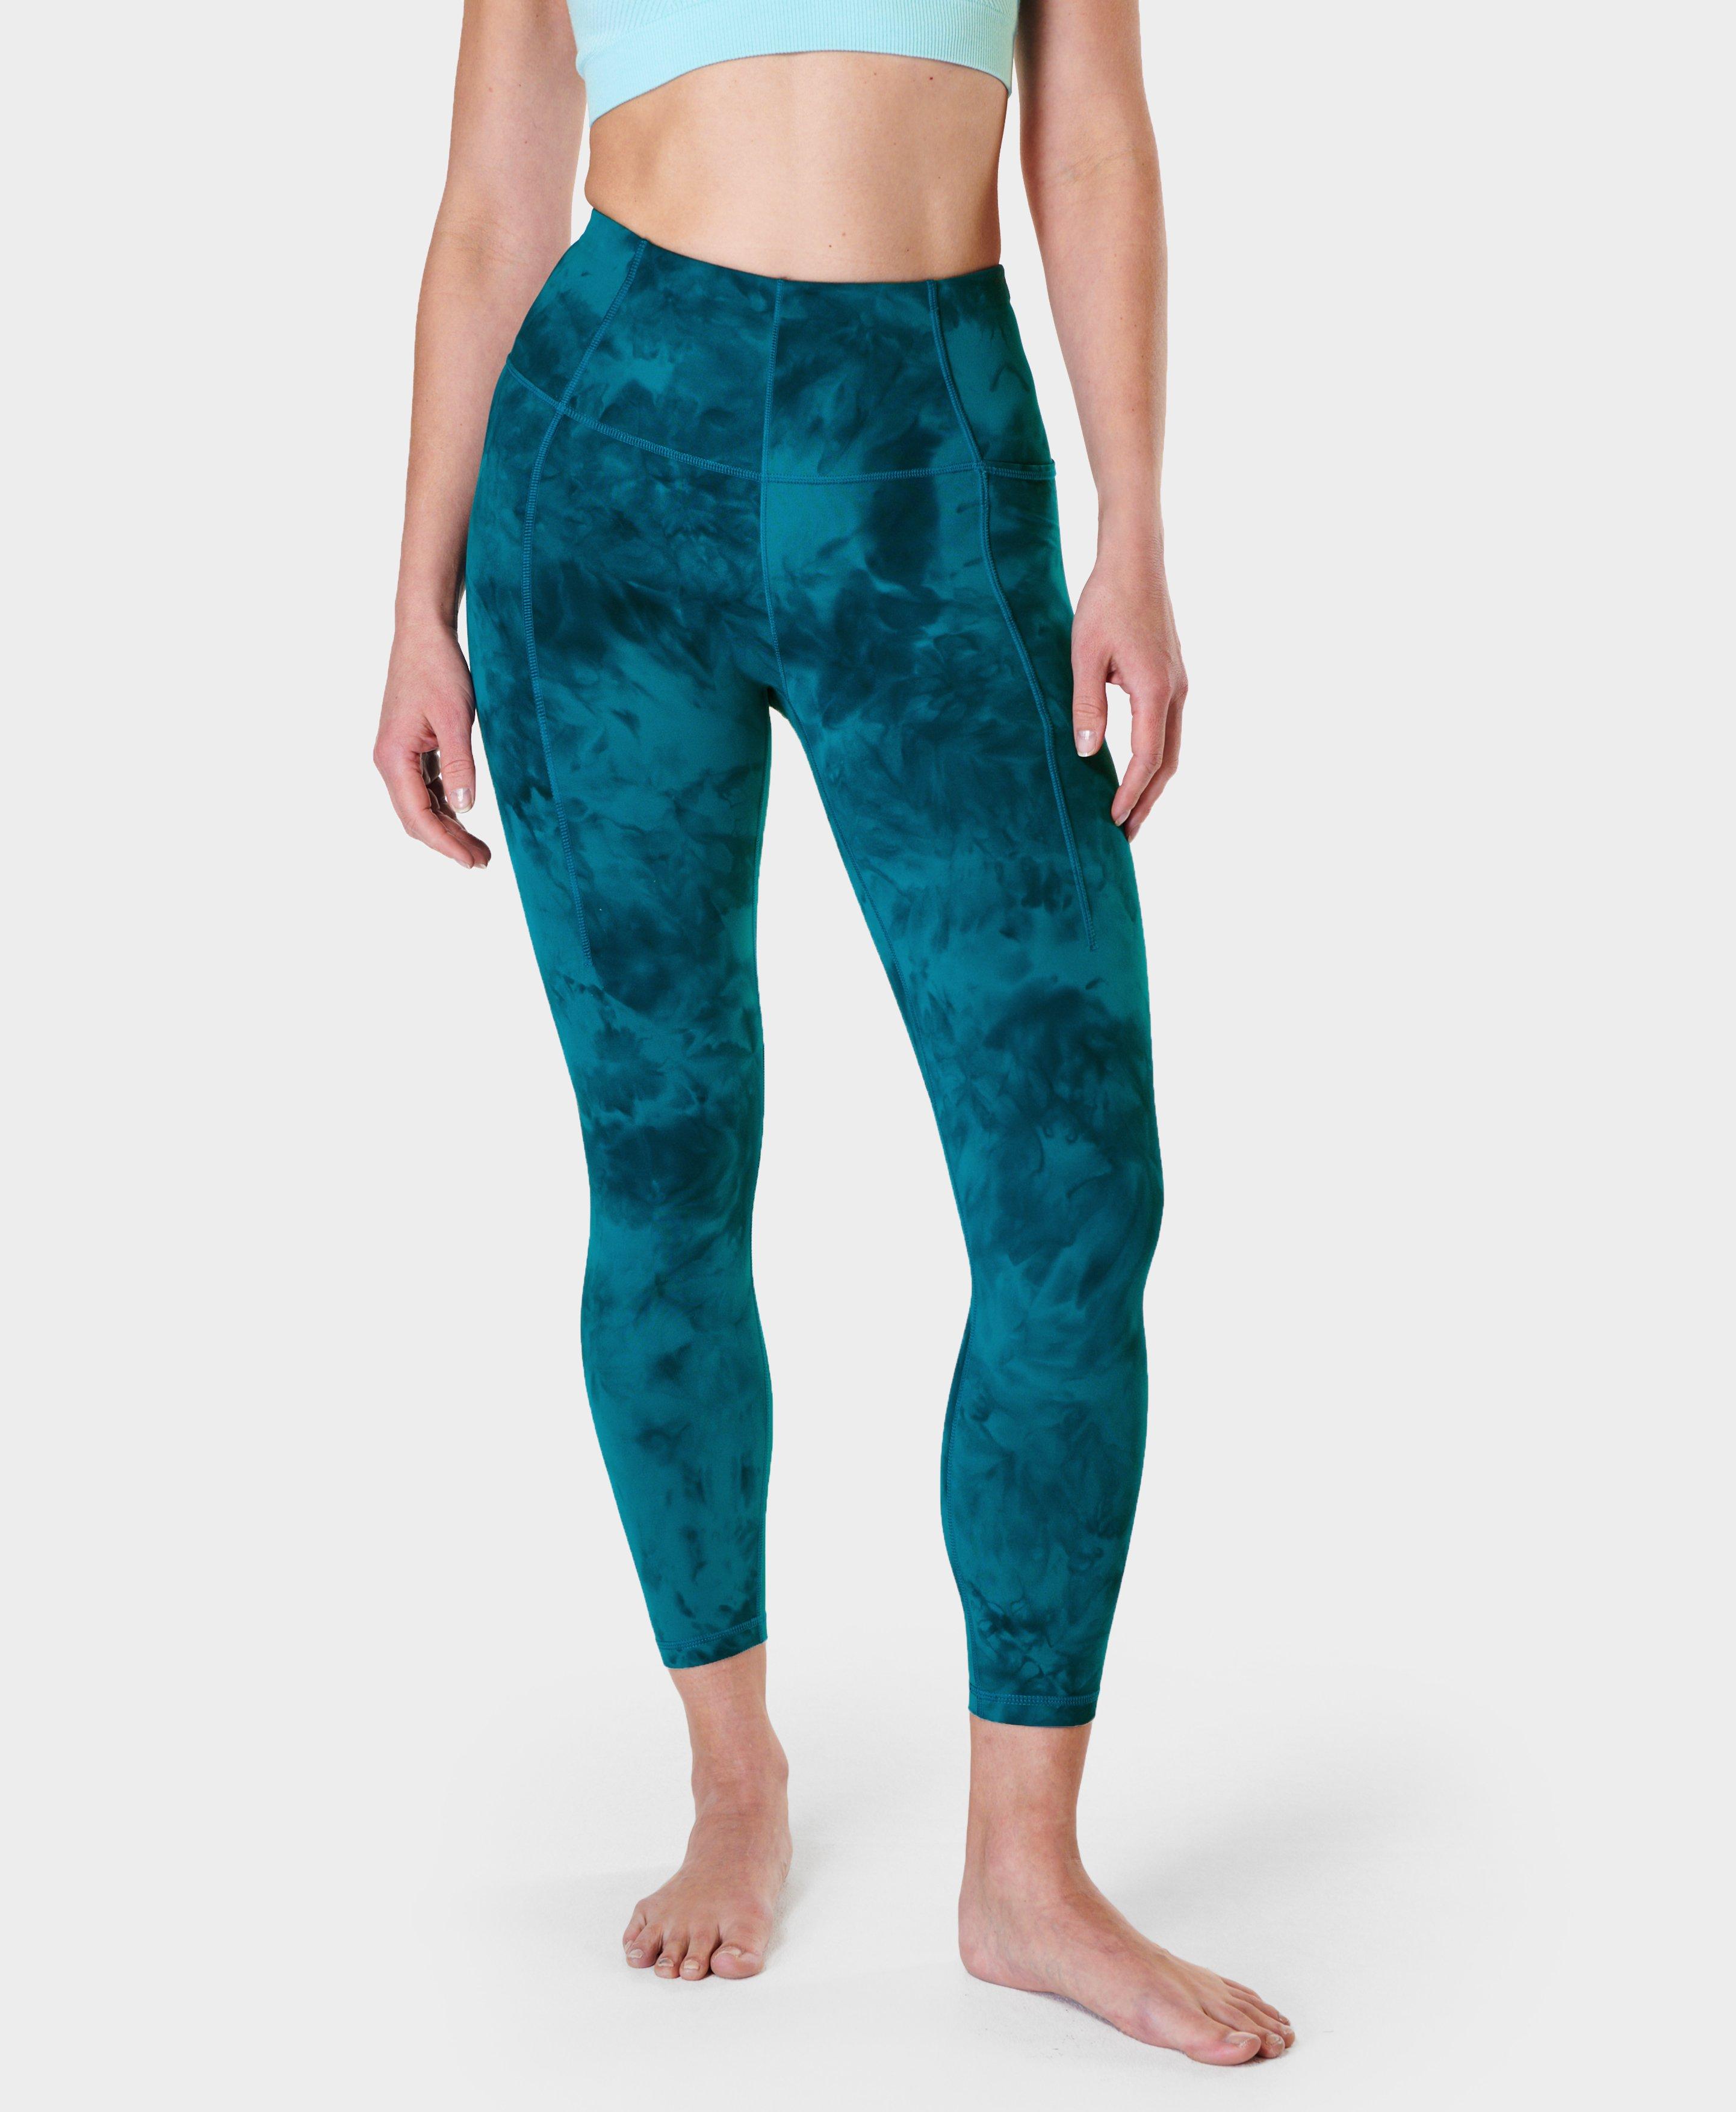 Lululemon Blue/Gray Ombré Balance & Resist 7/8 Tight Yoga Leggings